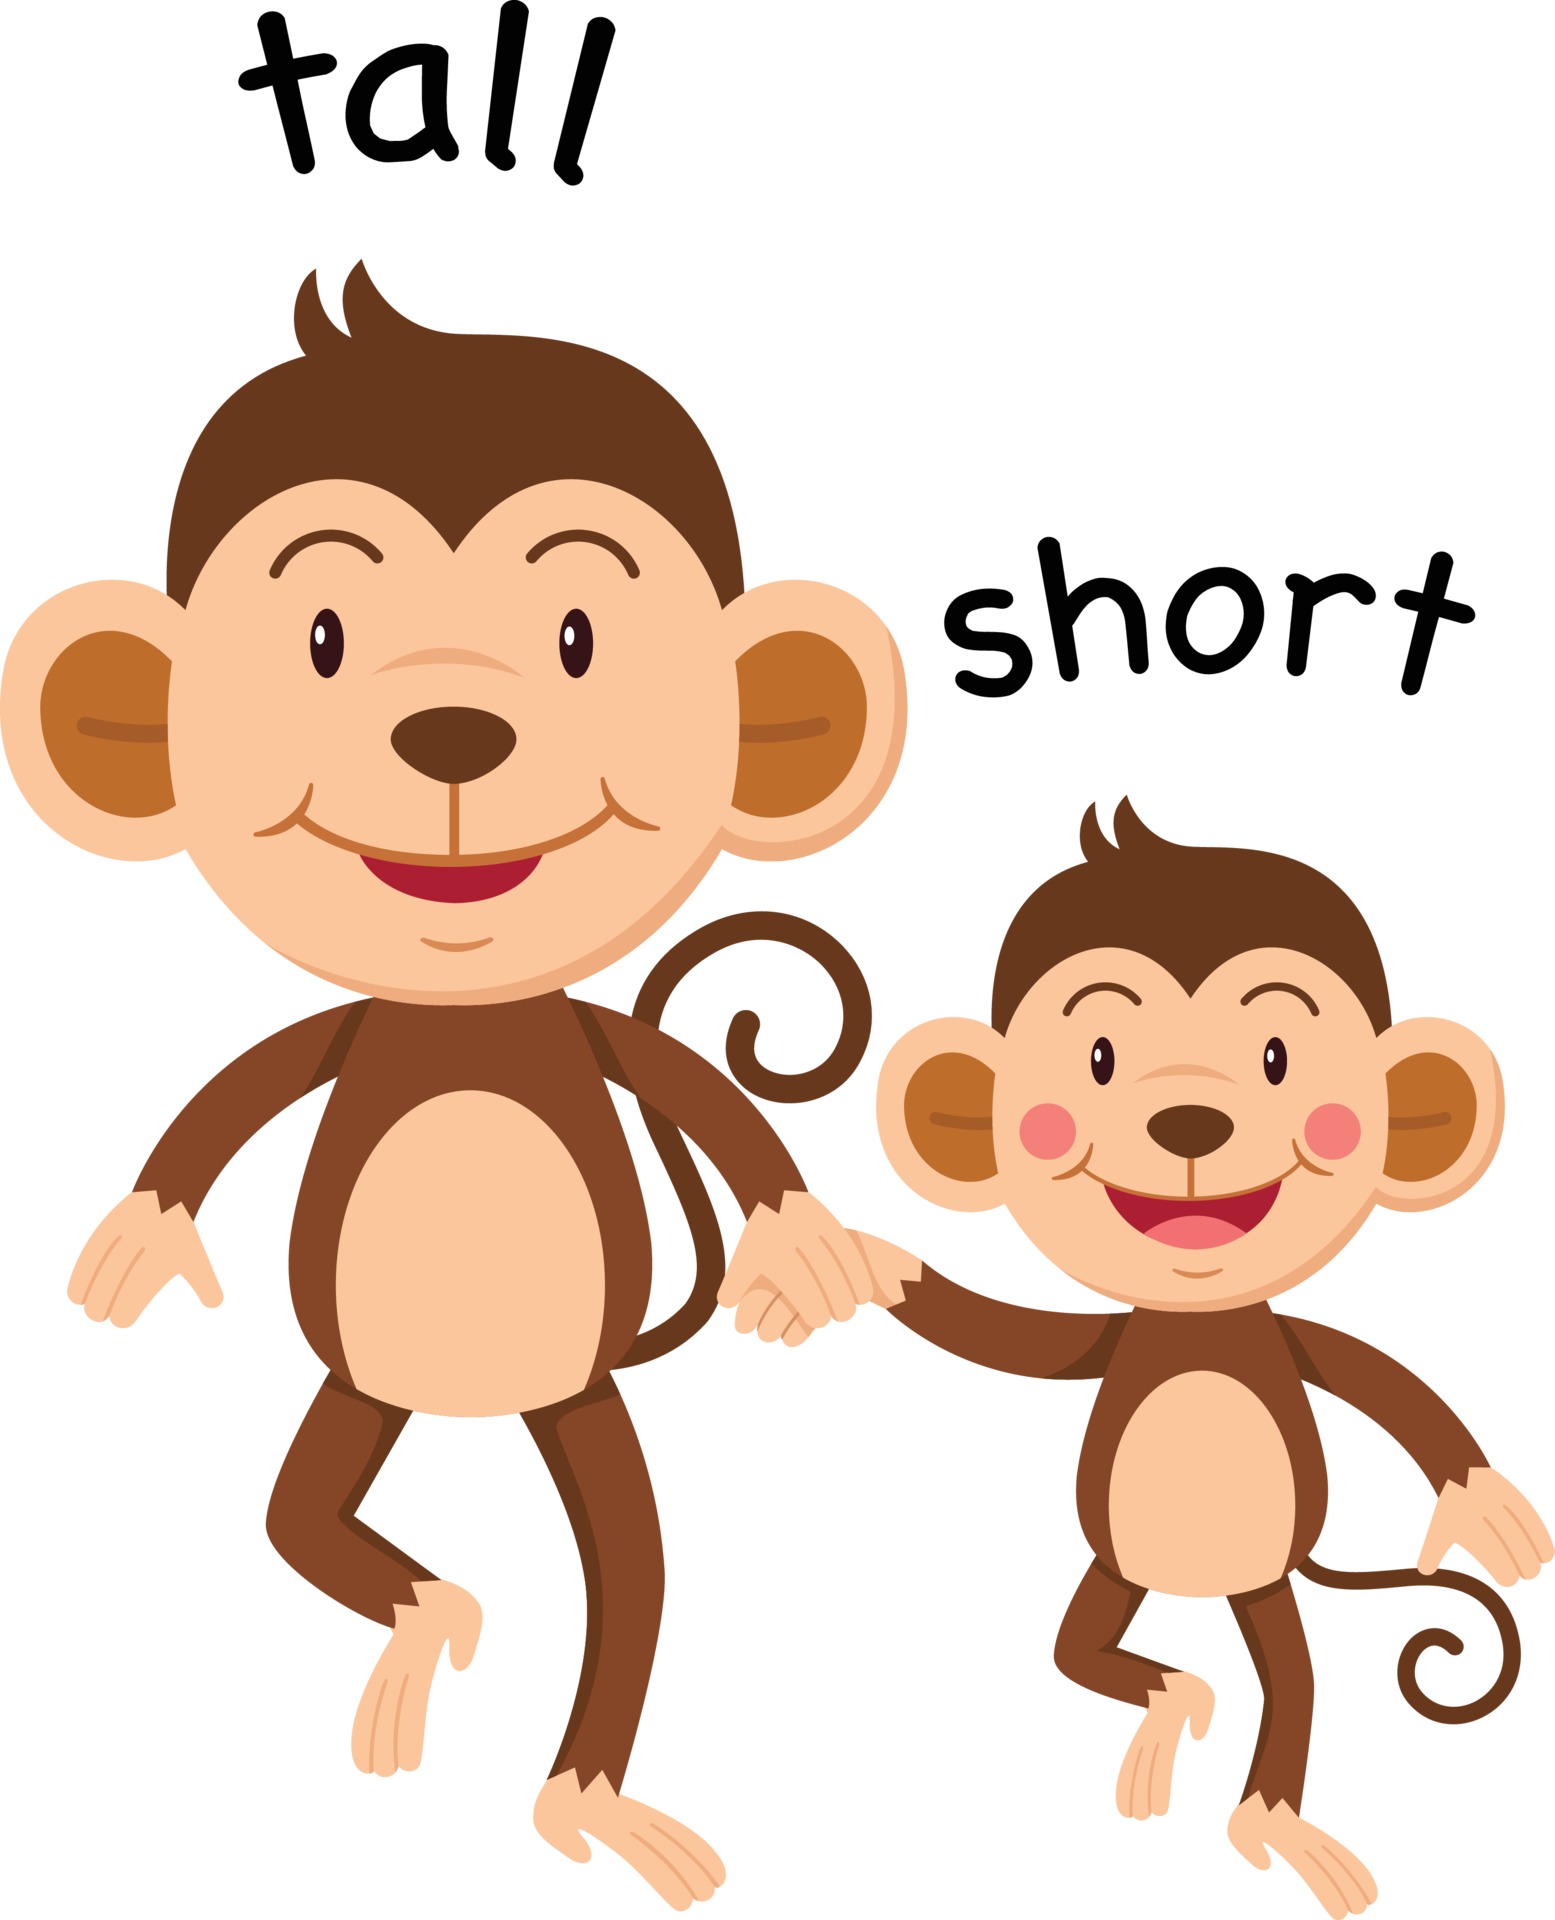 Opposites short. Tall short. Картинки Tall short. Tall short for Kids. Tall short opposites.